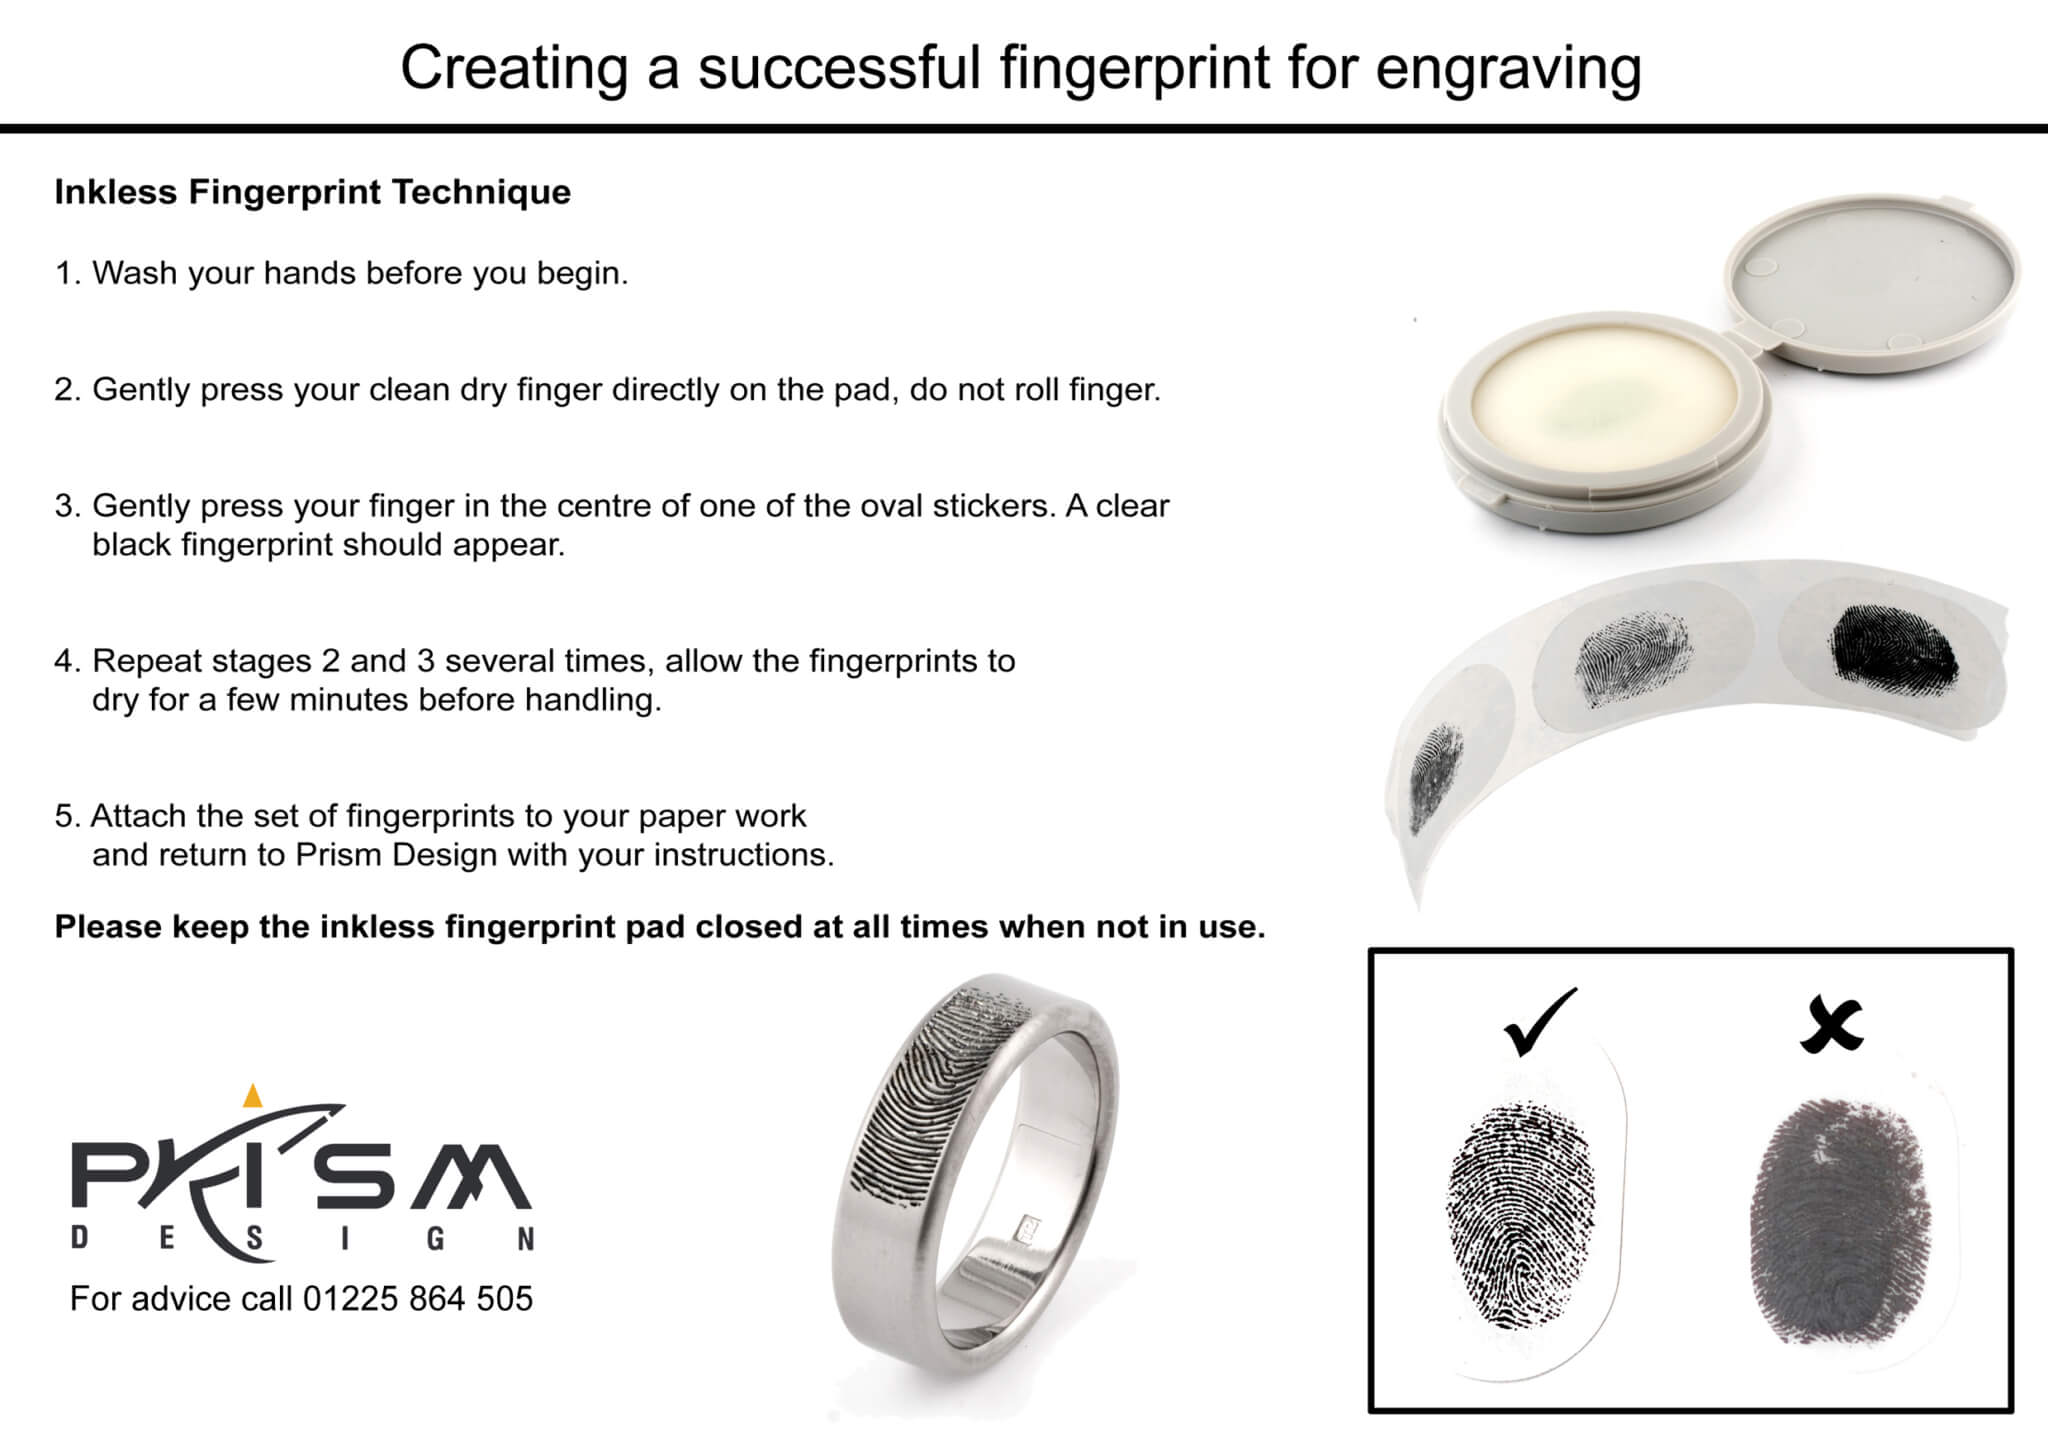 Ti2 Titanium - creating a fingerprint for engraving